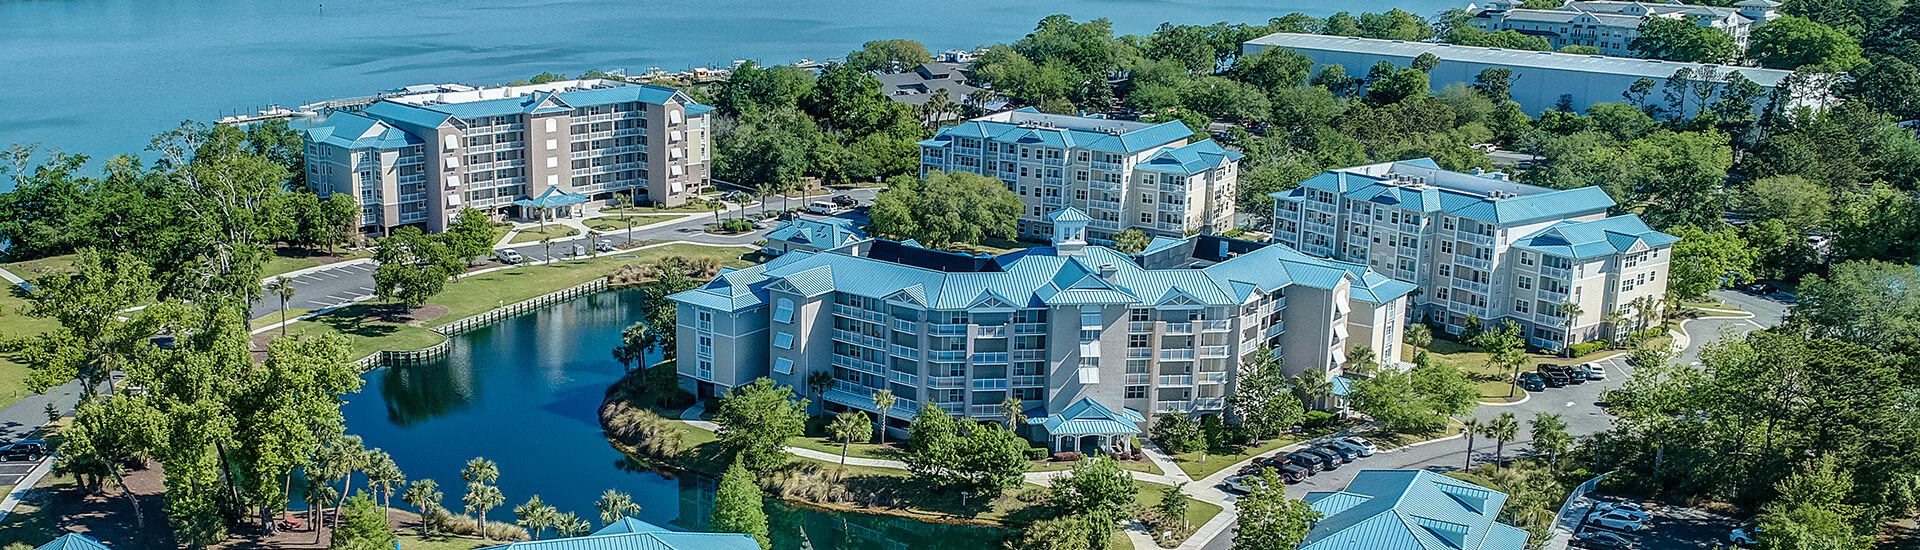 Photo of Spinnaker Resorts, Hilton Head Island, SC